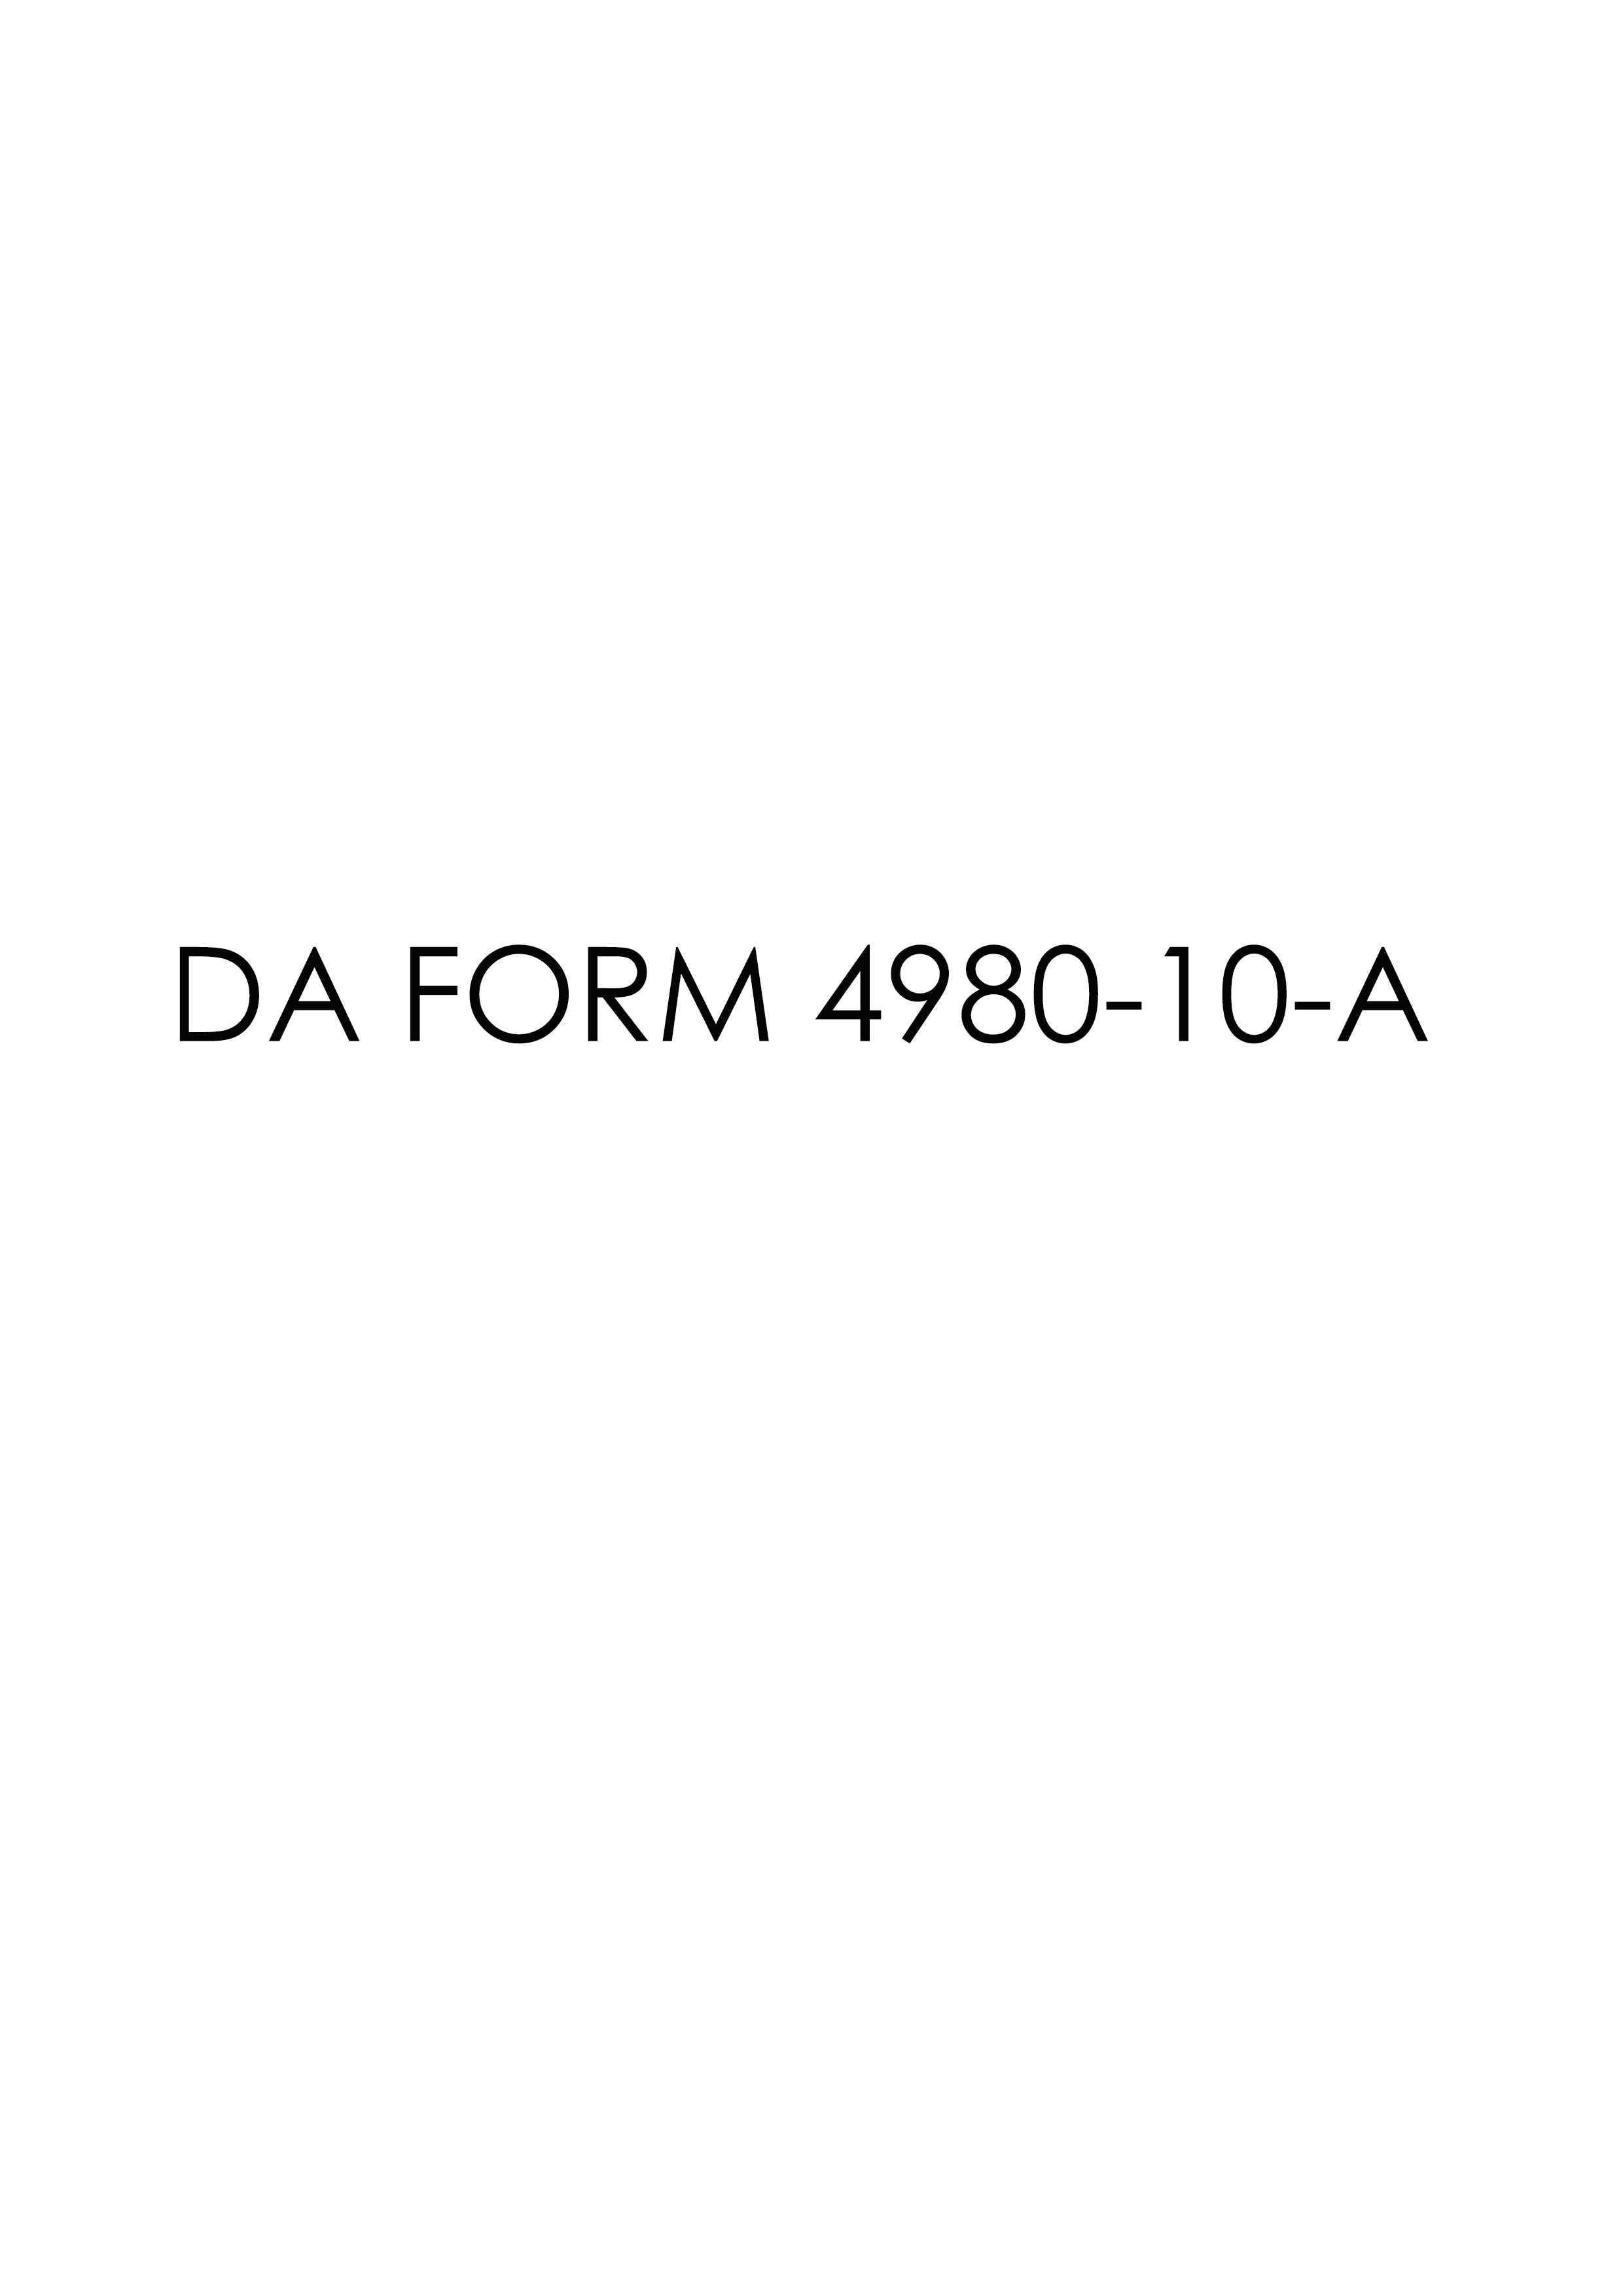 da Form 4980-10-A fillable